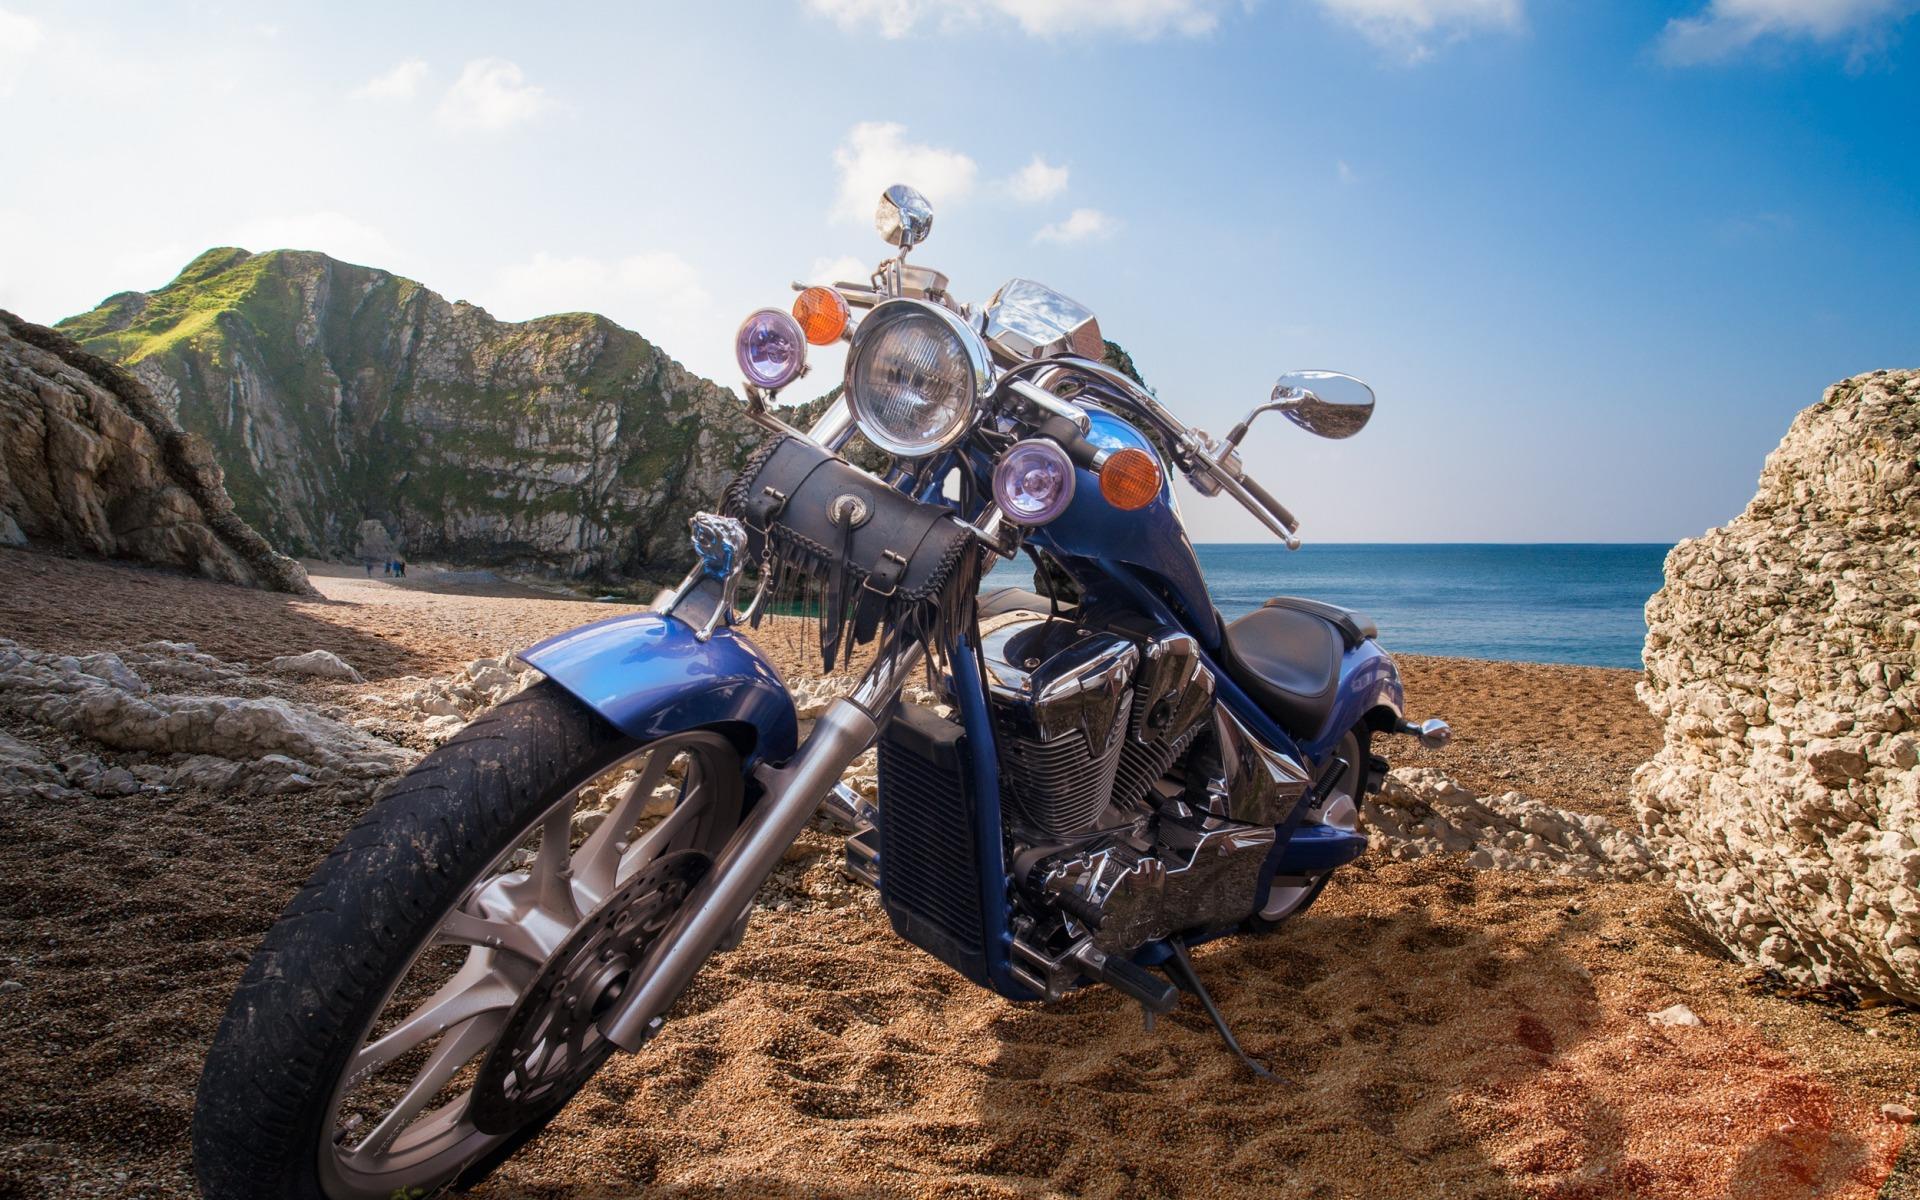 Download wallpaper chopper, luxury blue motorcycles, travel